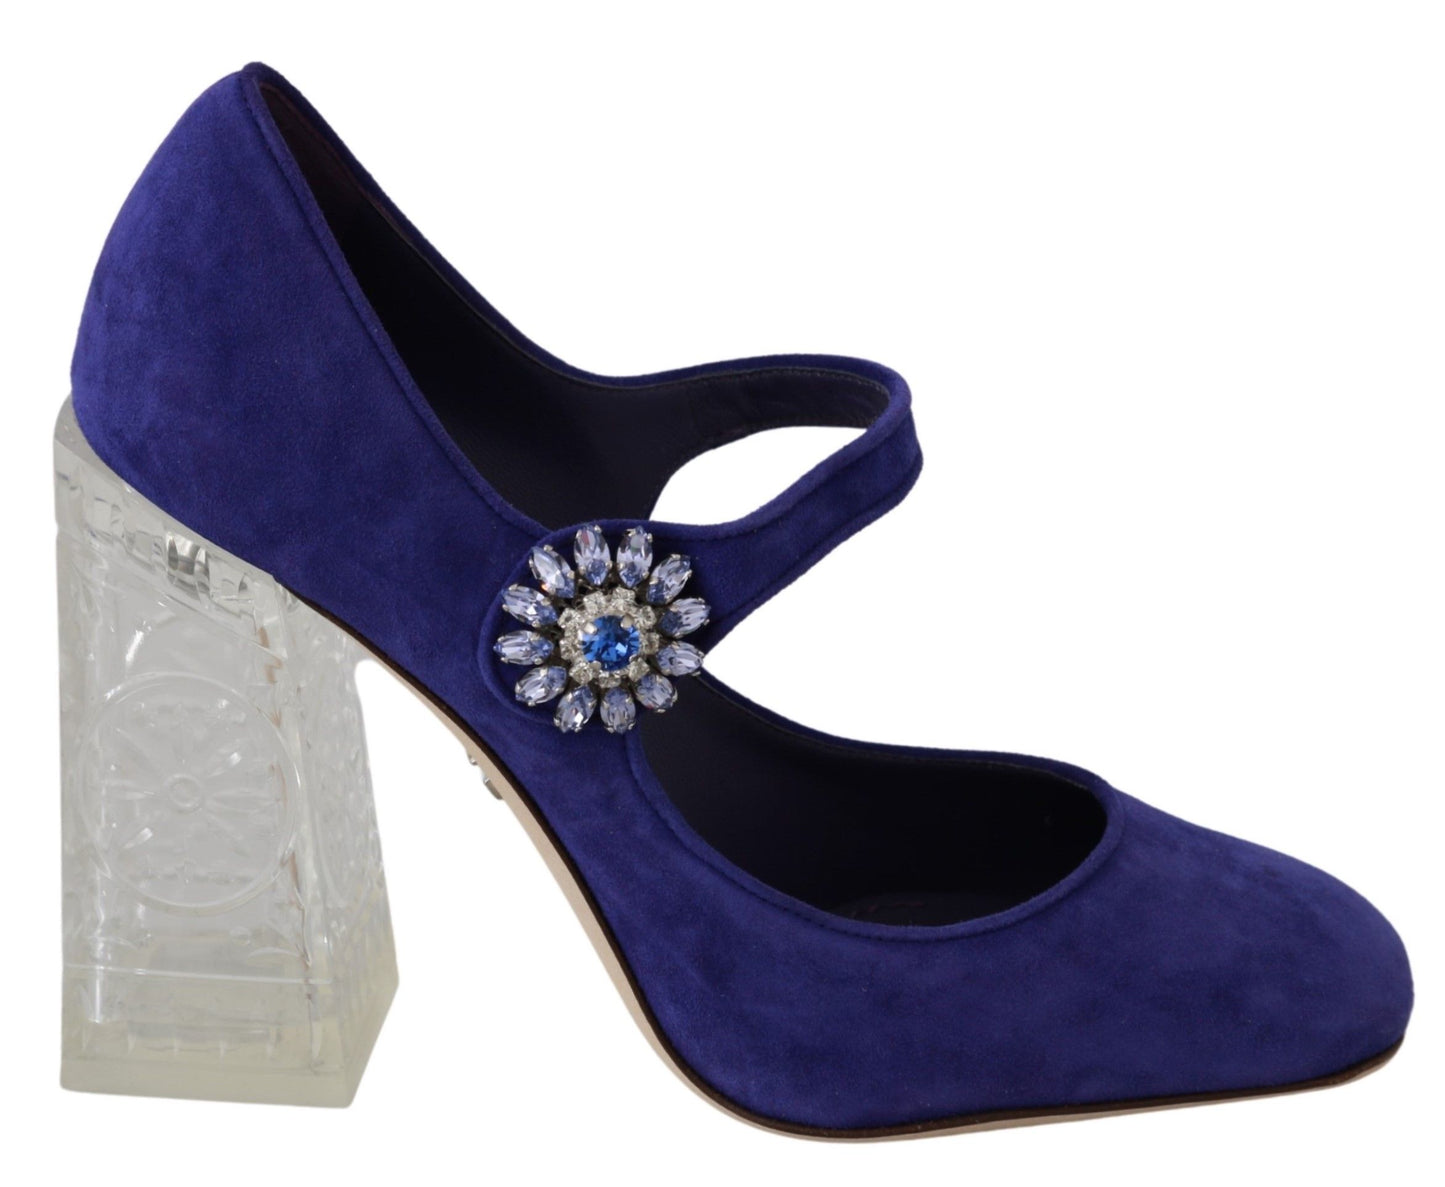 Dolce & Gabbana Purple Suede Crystal Pumps Heels Shoes